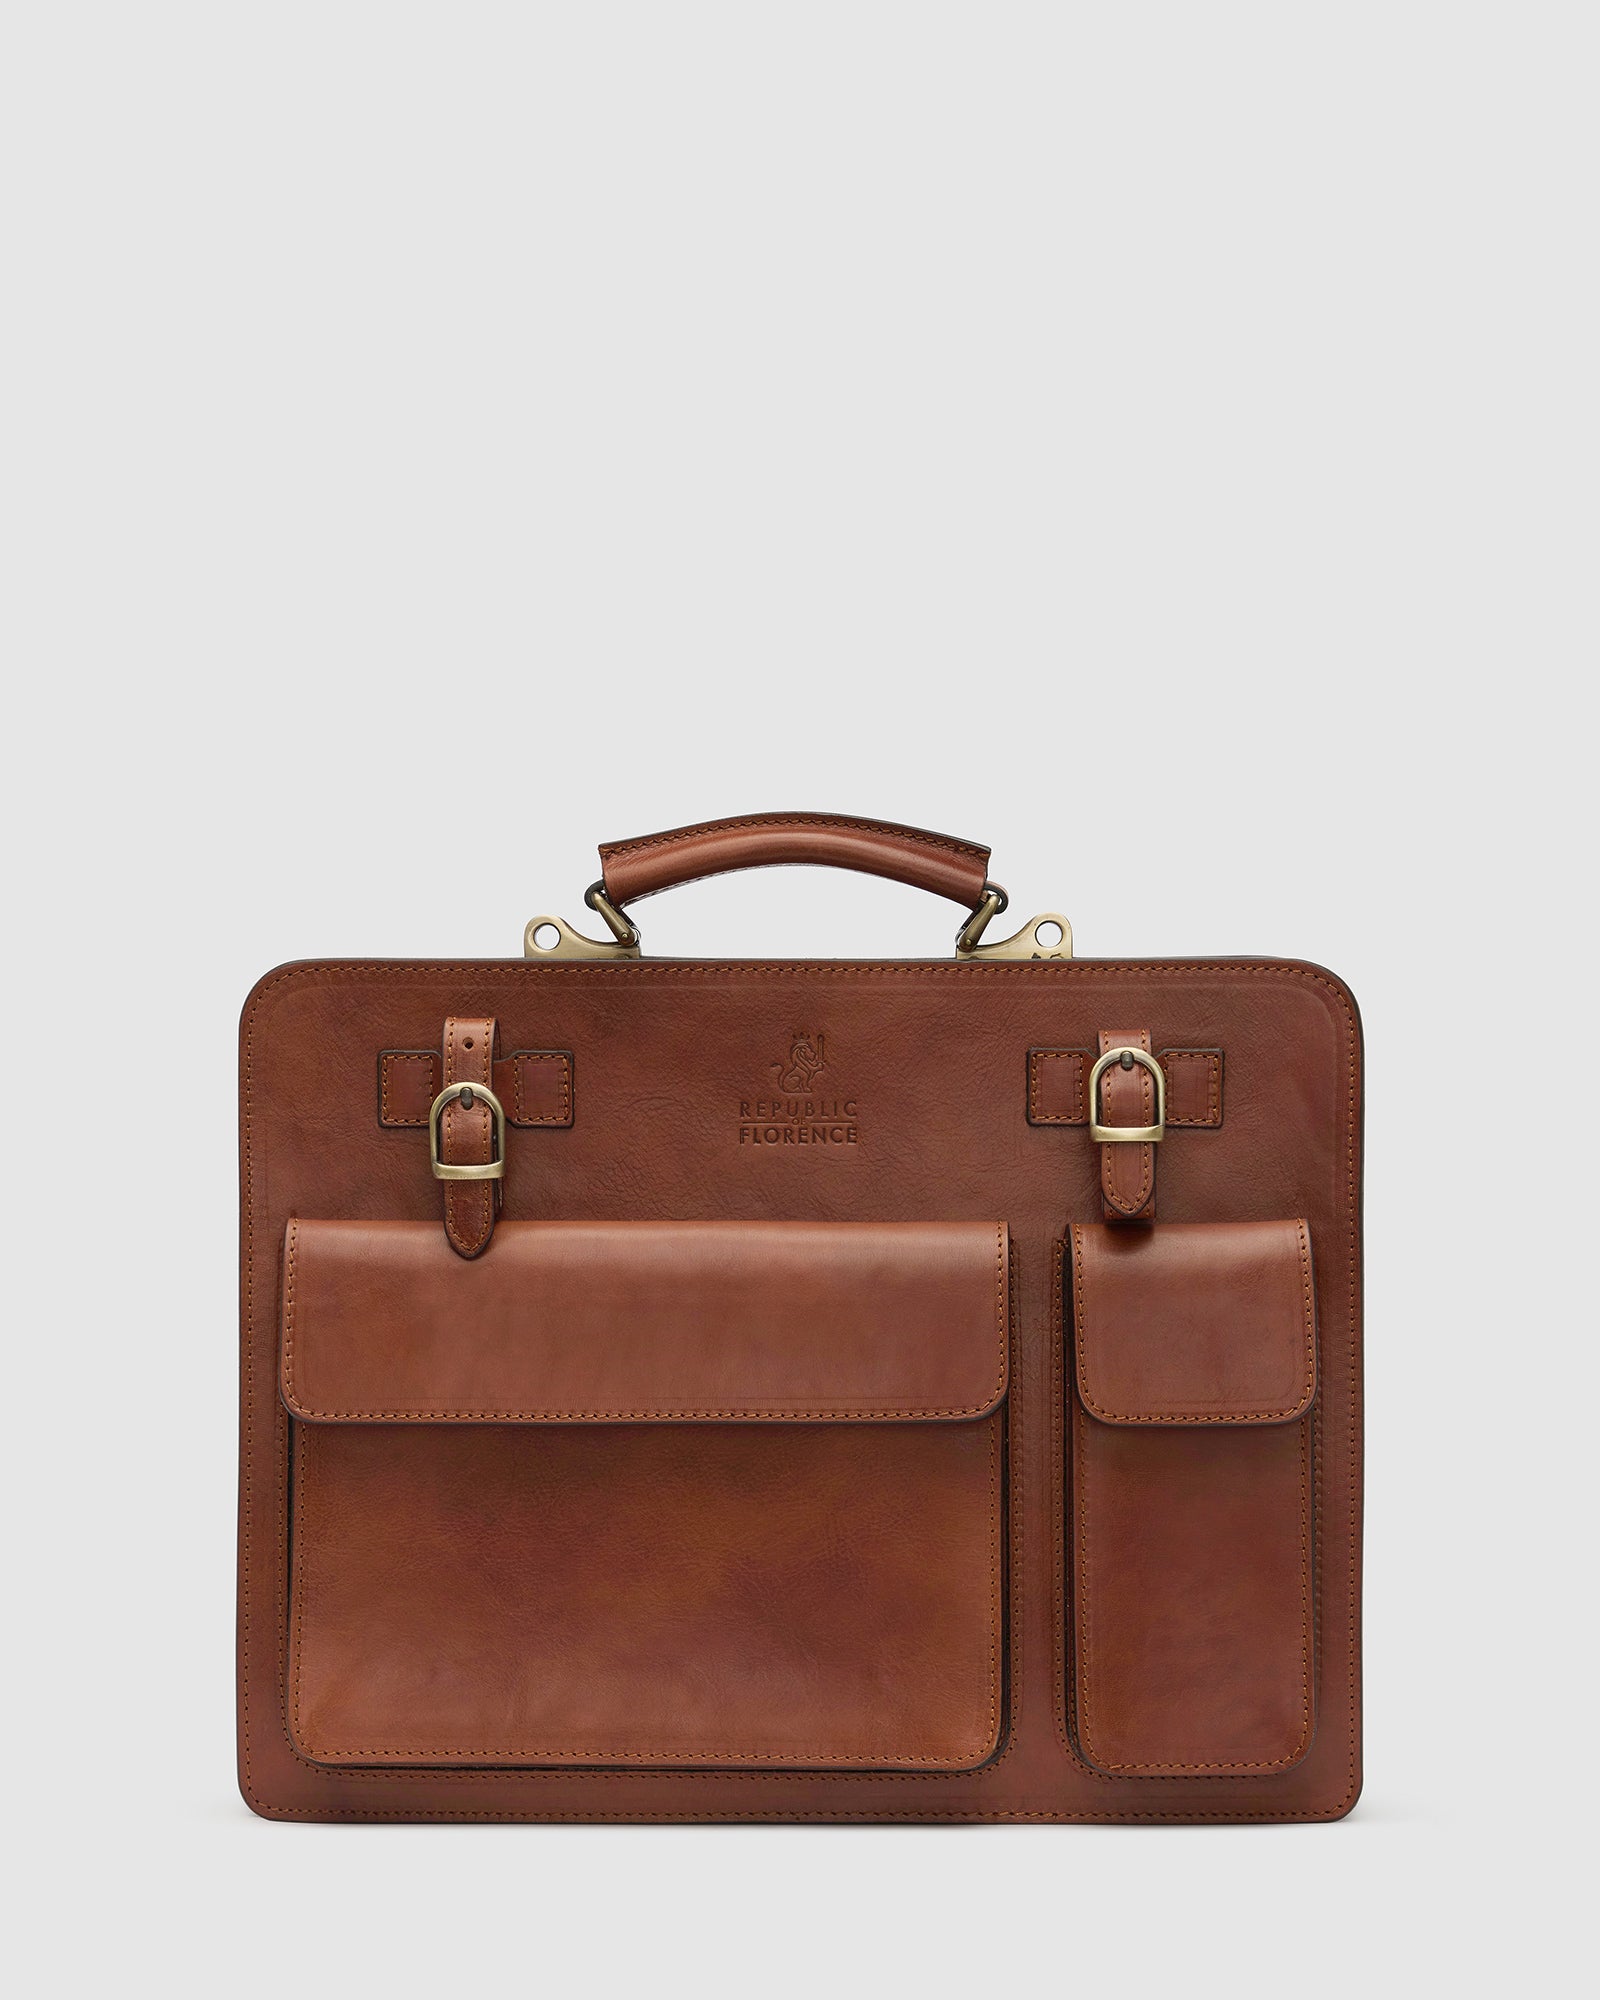 Combination Lock Men Leather Crossbody Shoulder Bag Handbag Briefcase  Laptop Bag | eBay